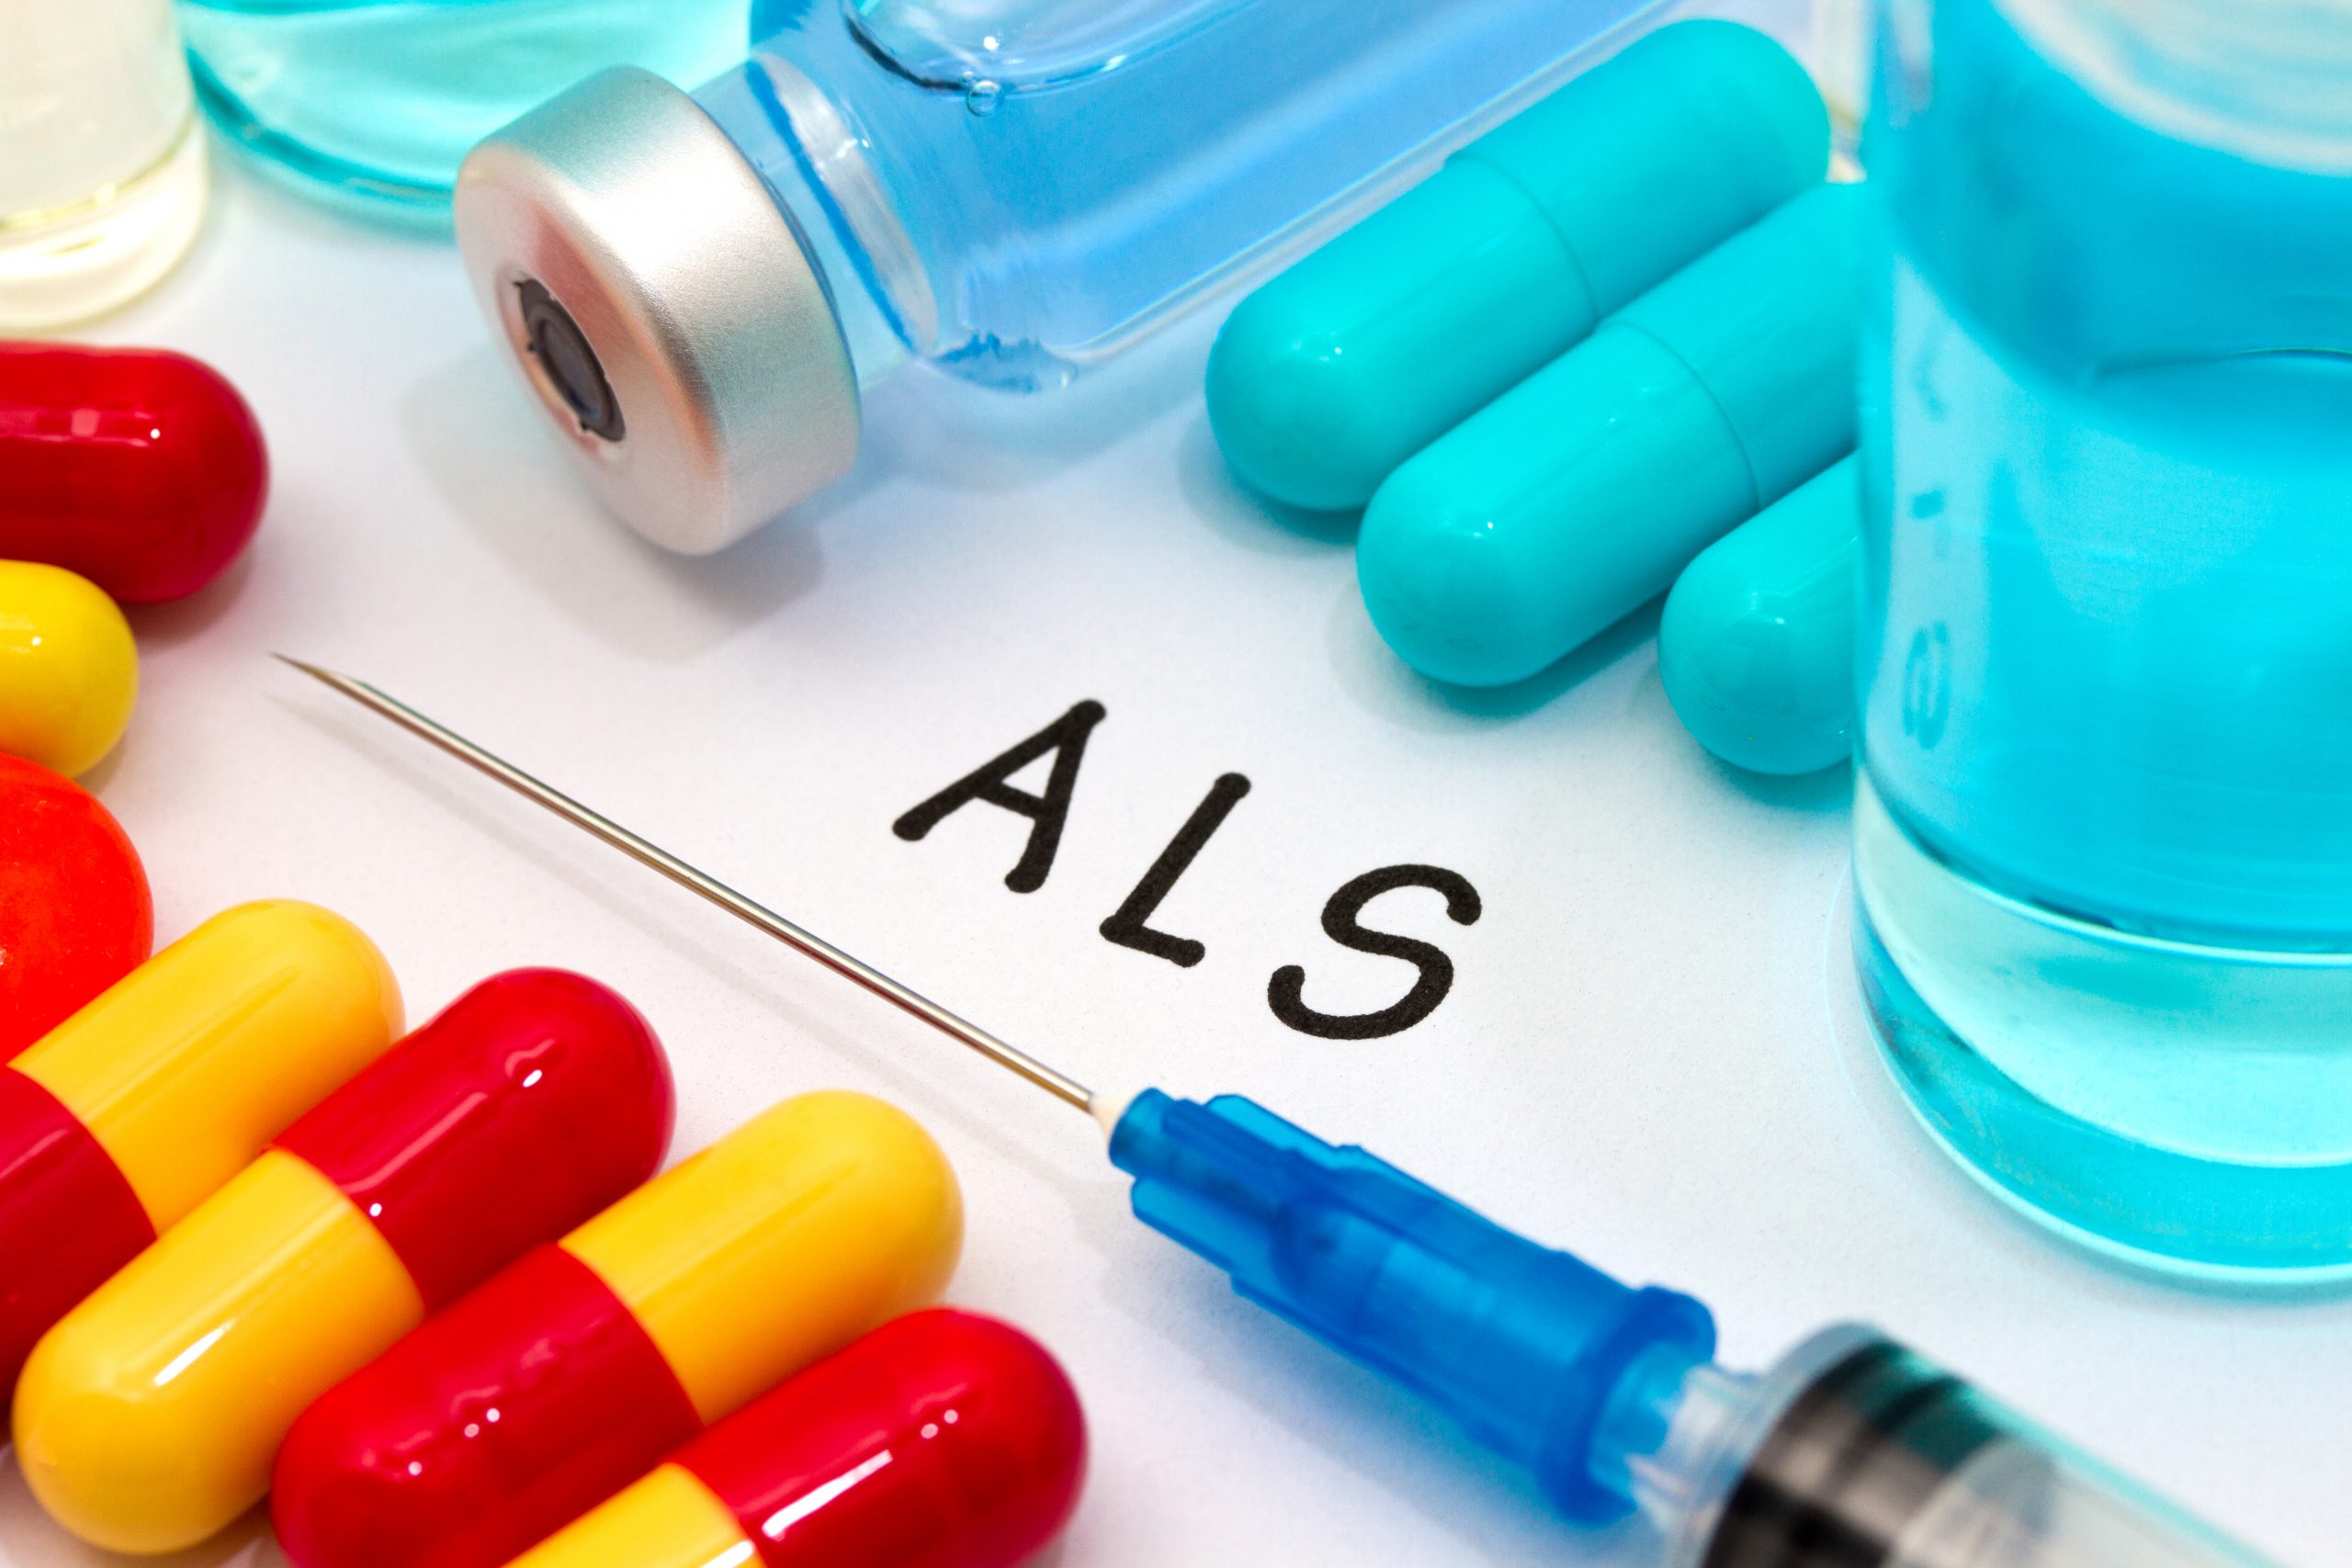 EMA accepts marketing application for ALS treatment